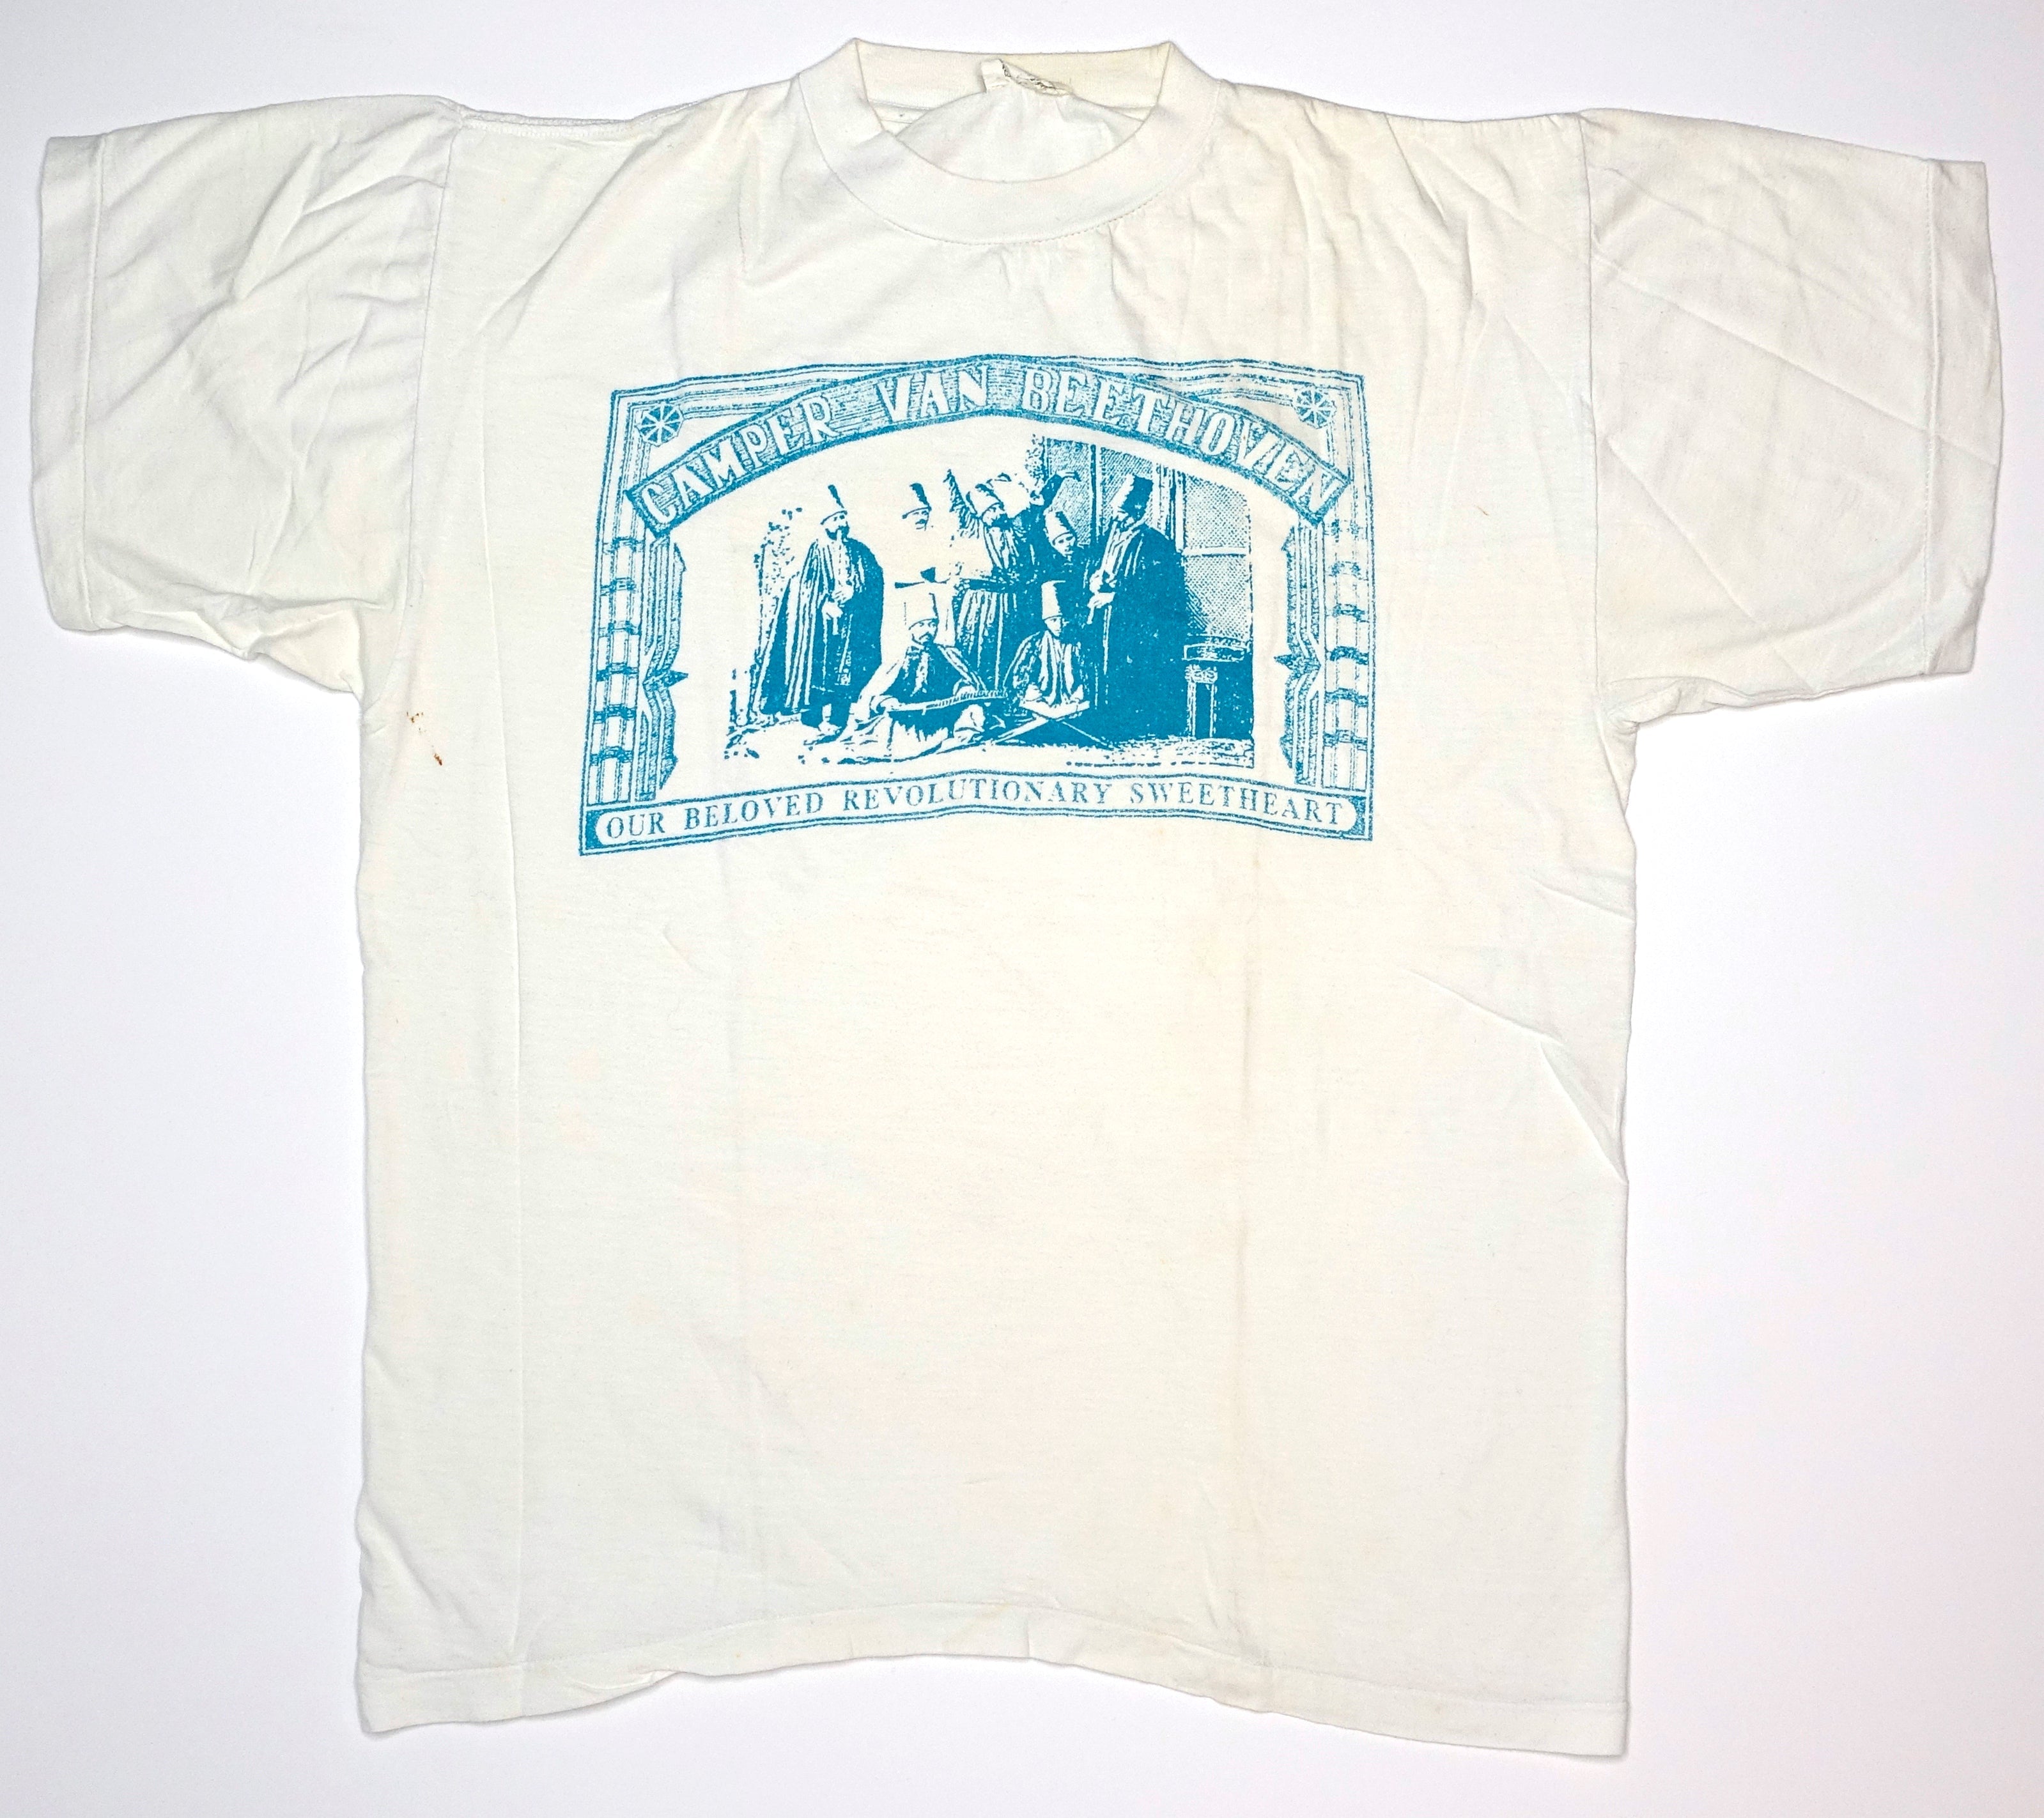 Camper Van Beethoven – Our Beloved Revolutionary Sweetheart 1988 Tour Shirt Size XL